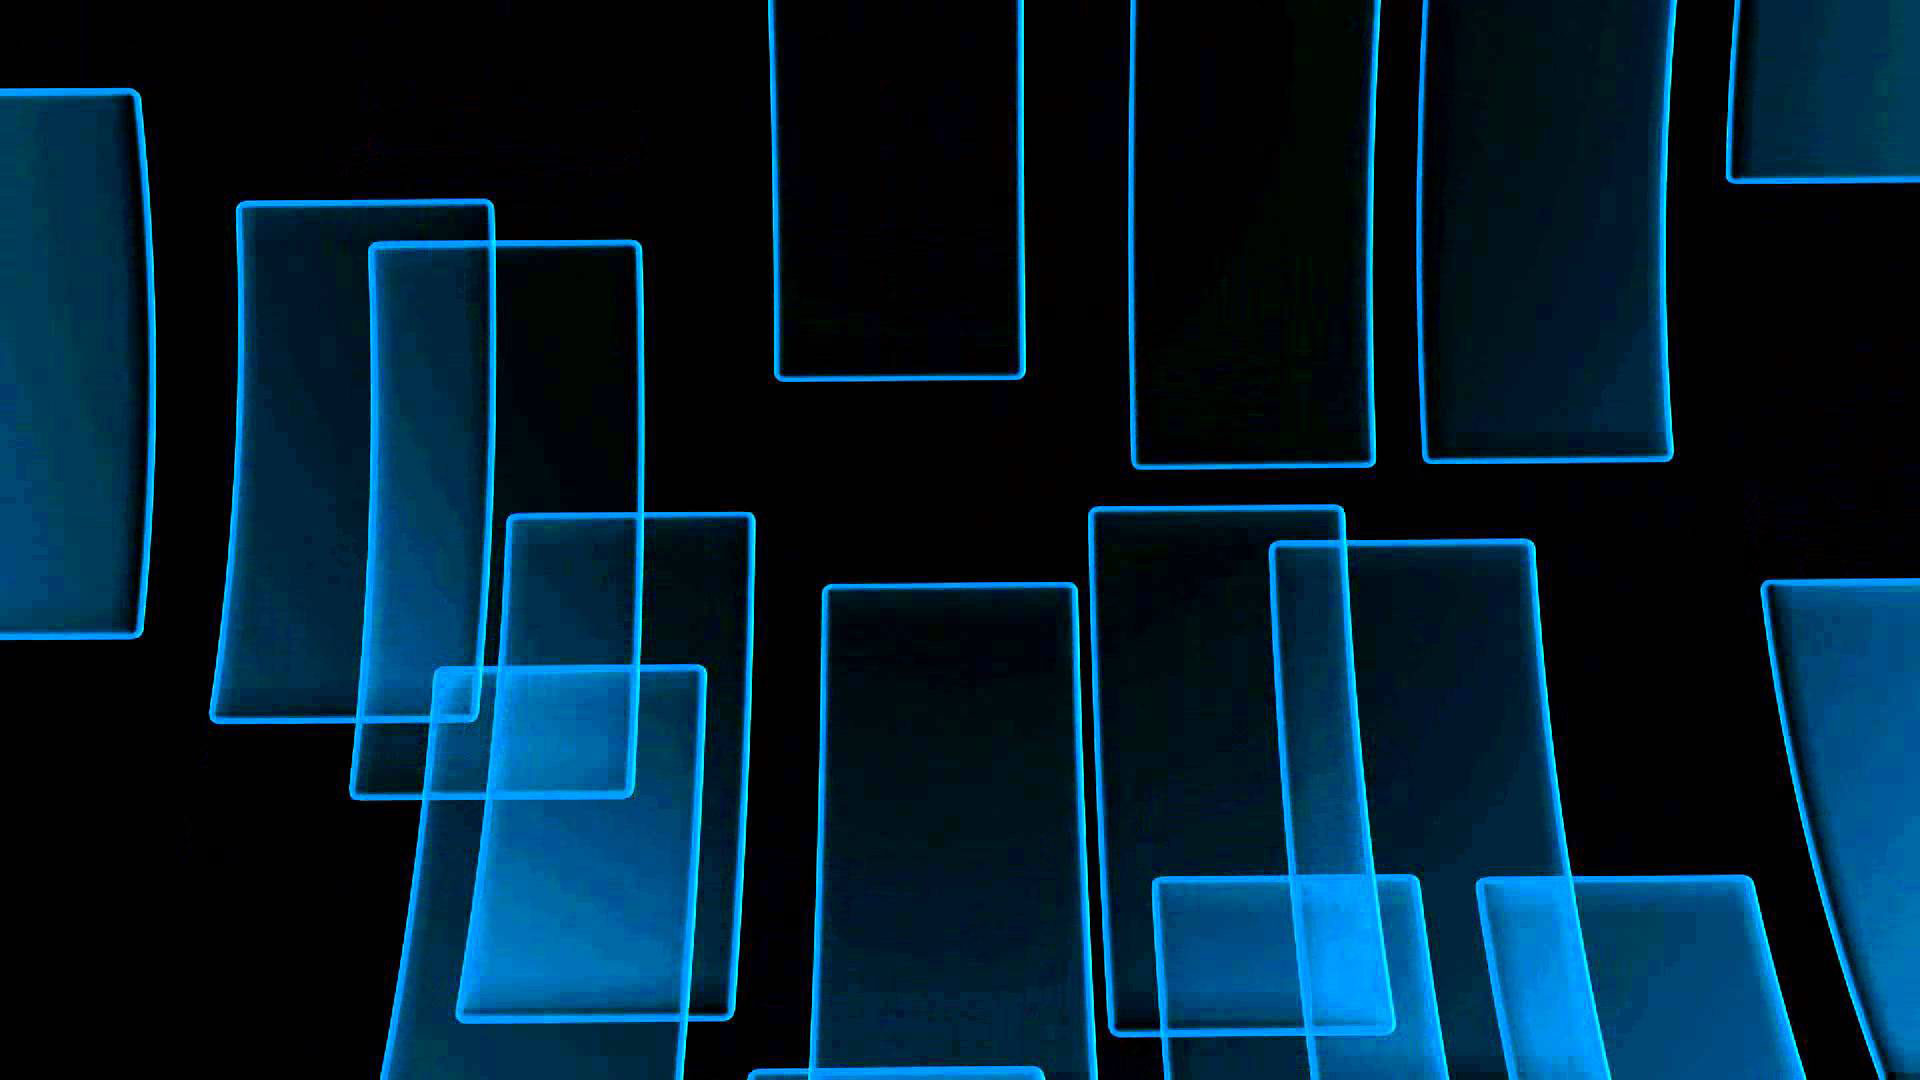 Hd pics photos technology neon blue hd attractive desktop background wallpaper